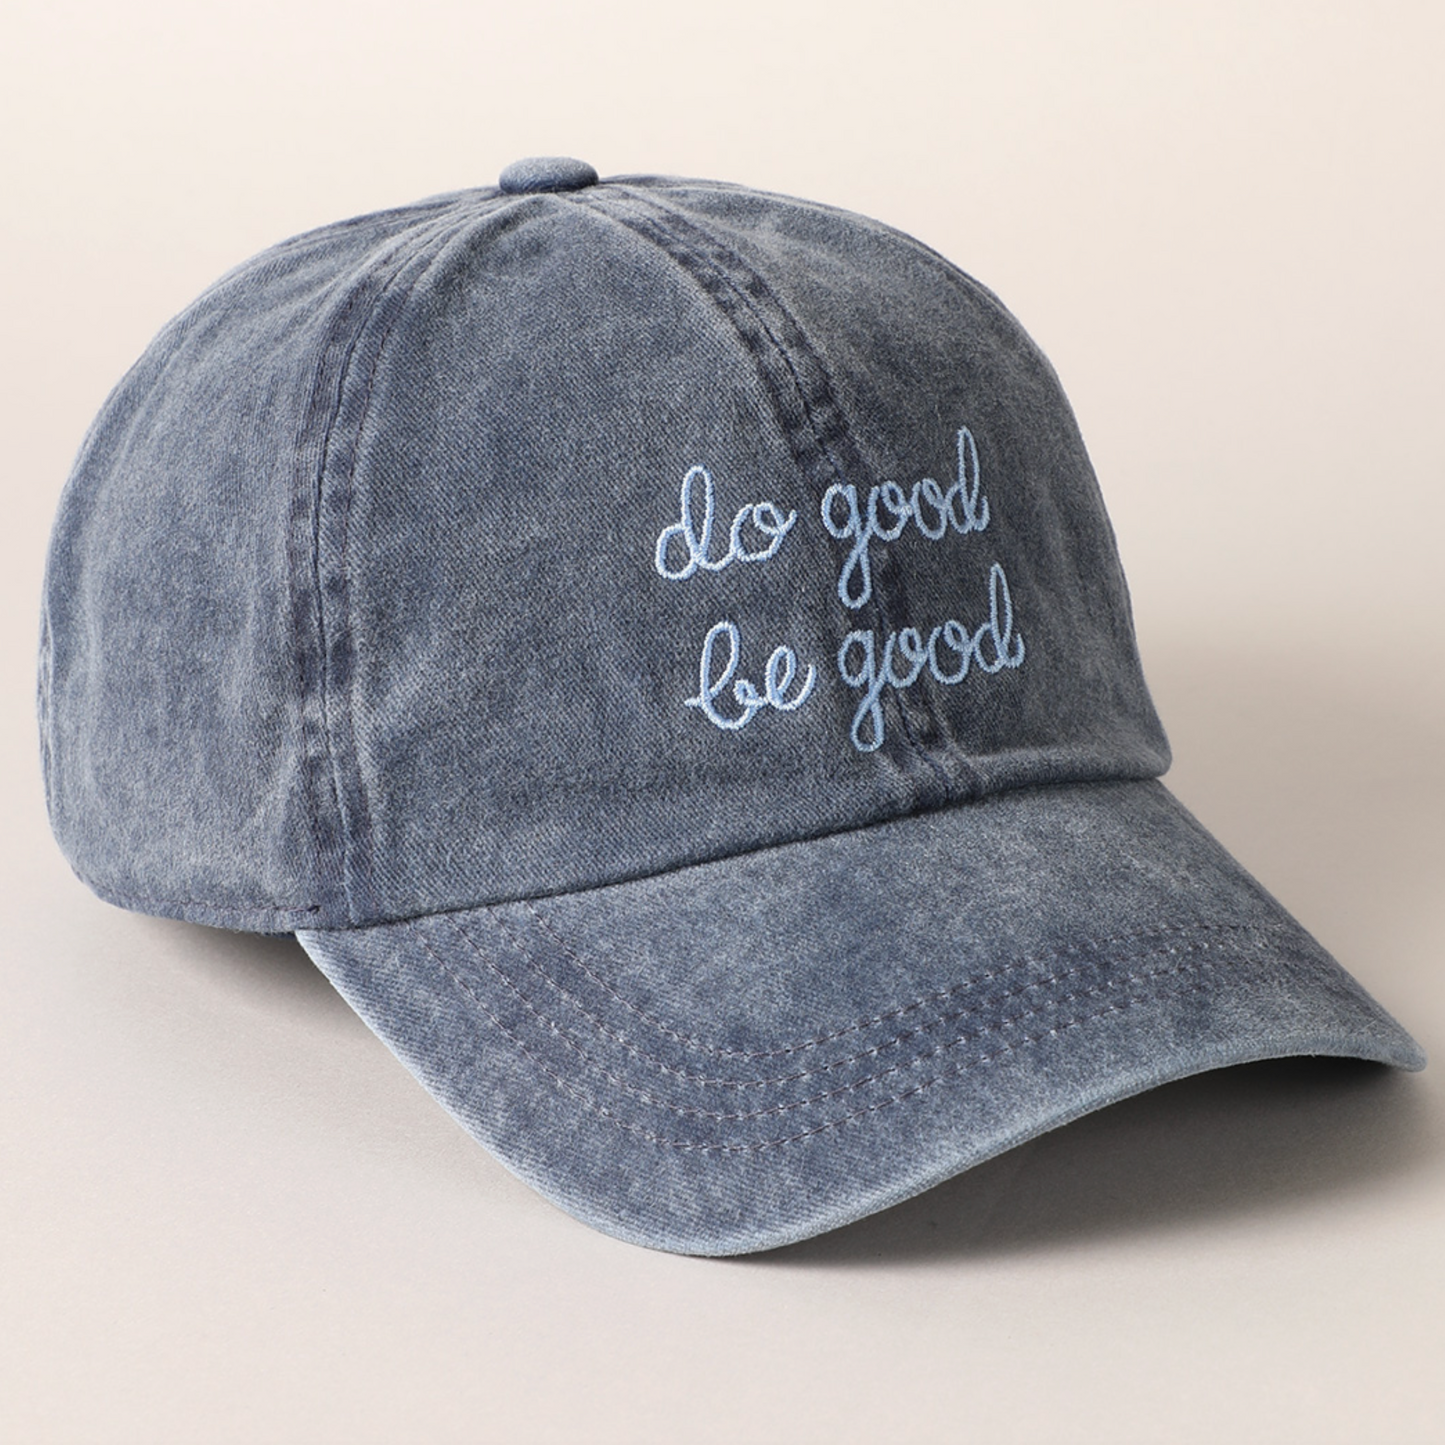 Do Good Be Good Hat